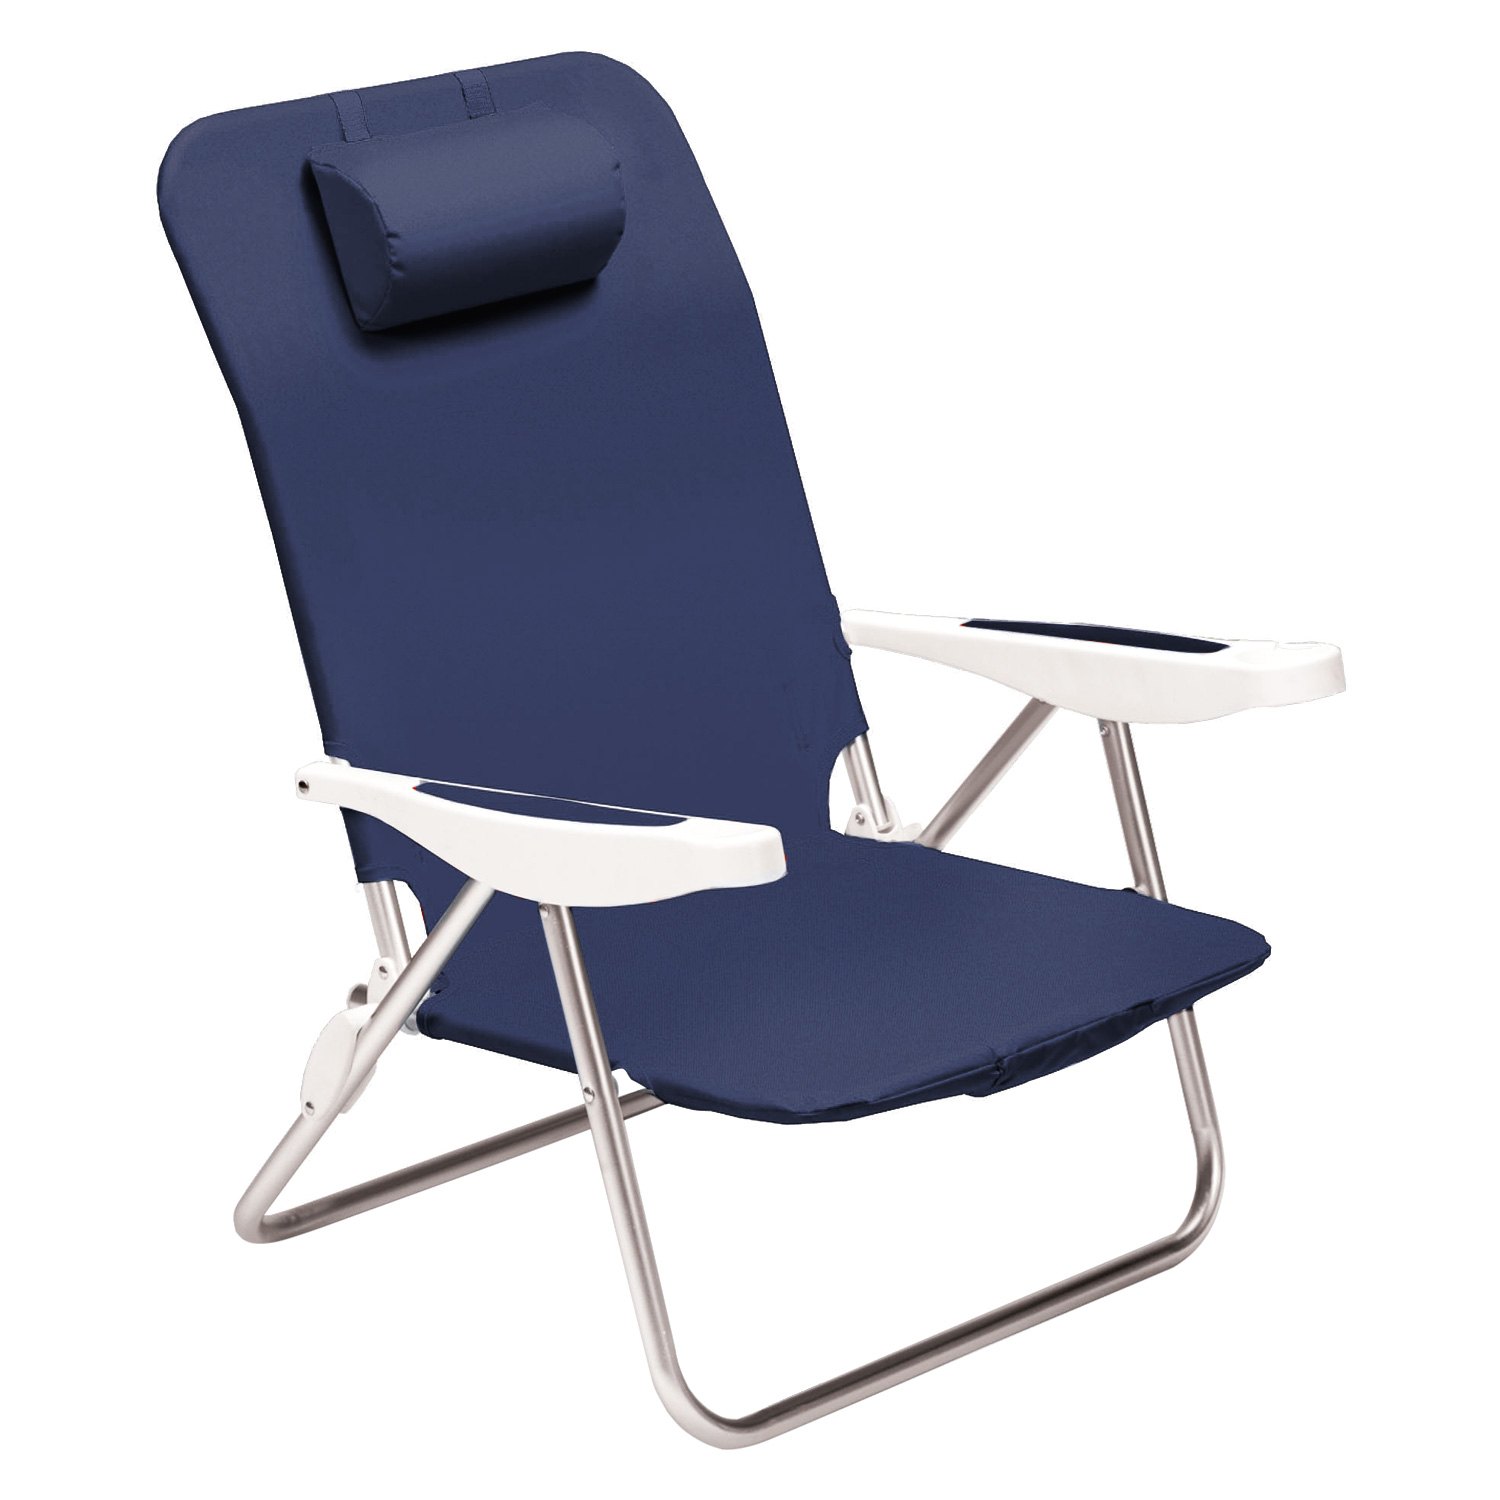 Modern Clemson Beach Chair for Simple Design